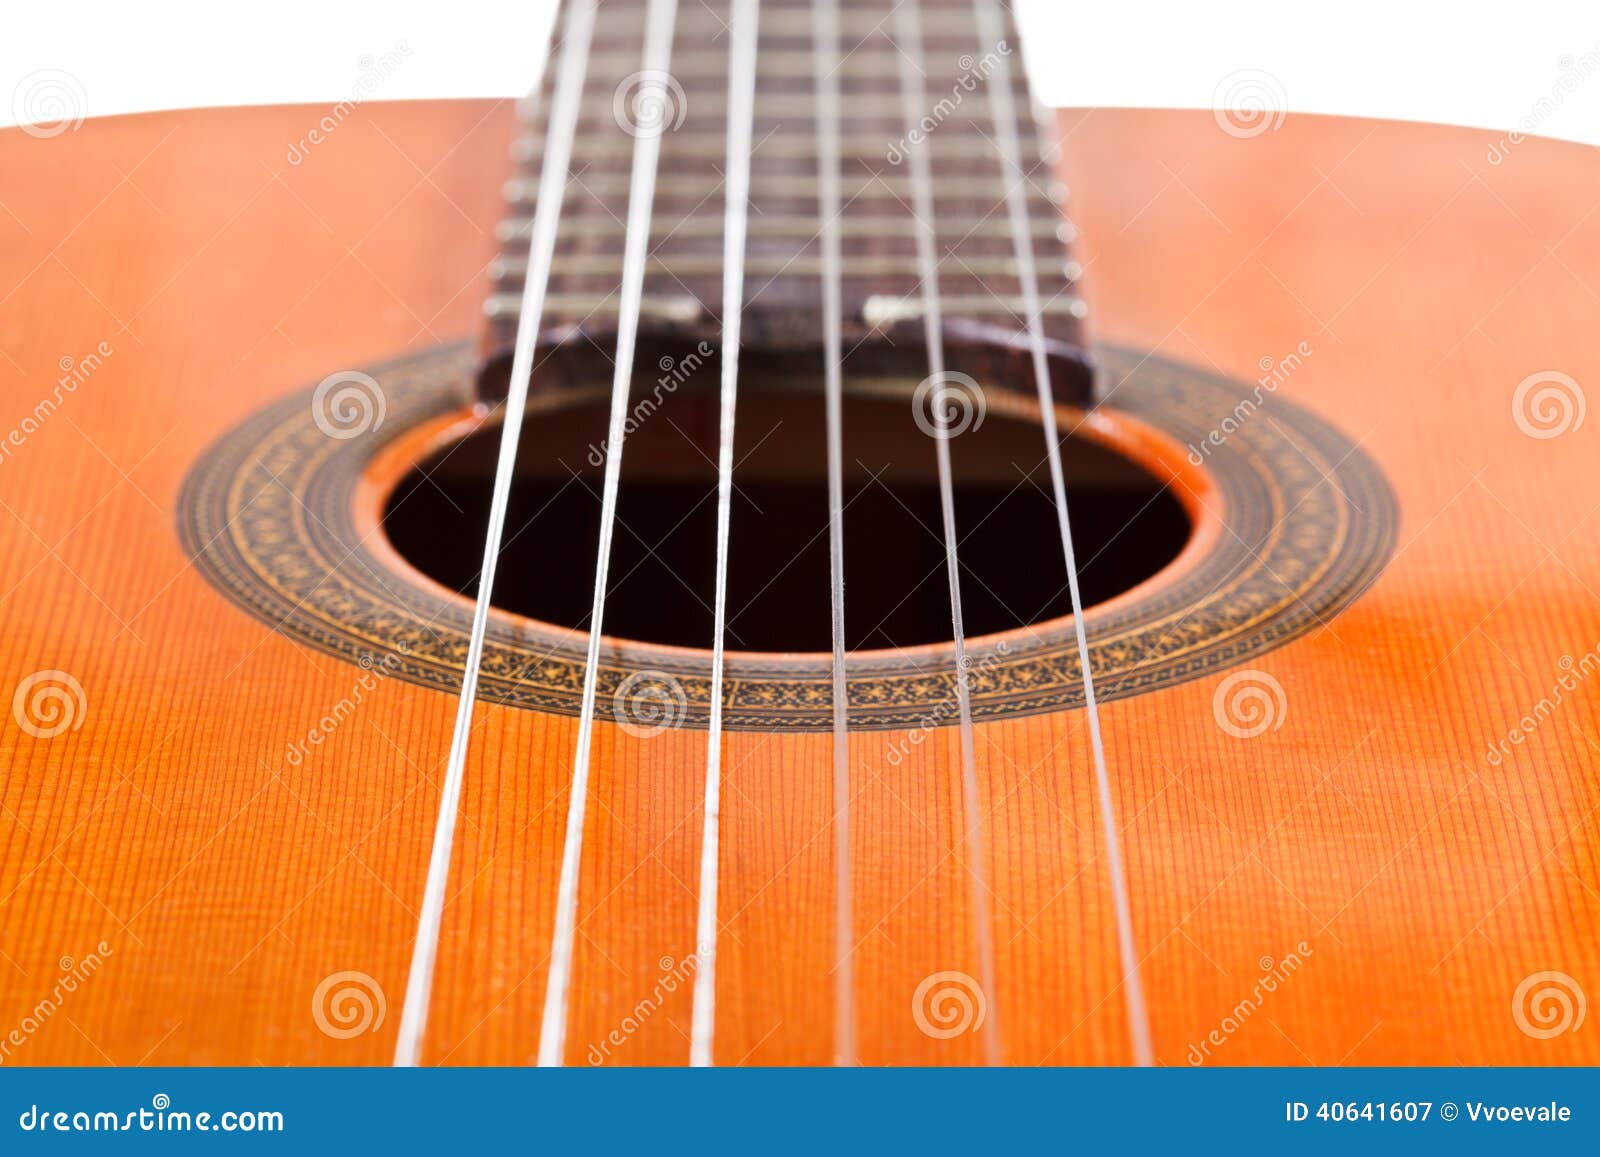 https://thumbs.dreamstime.com/z/six-nylon-strings-classical-acoustic-guitar-close-up-40641607.jpg